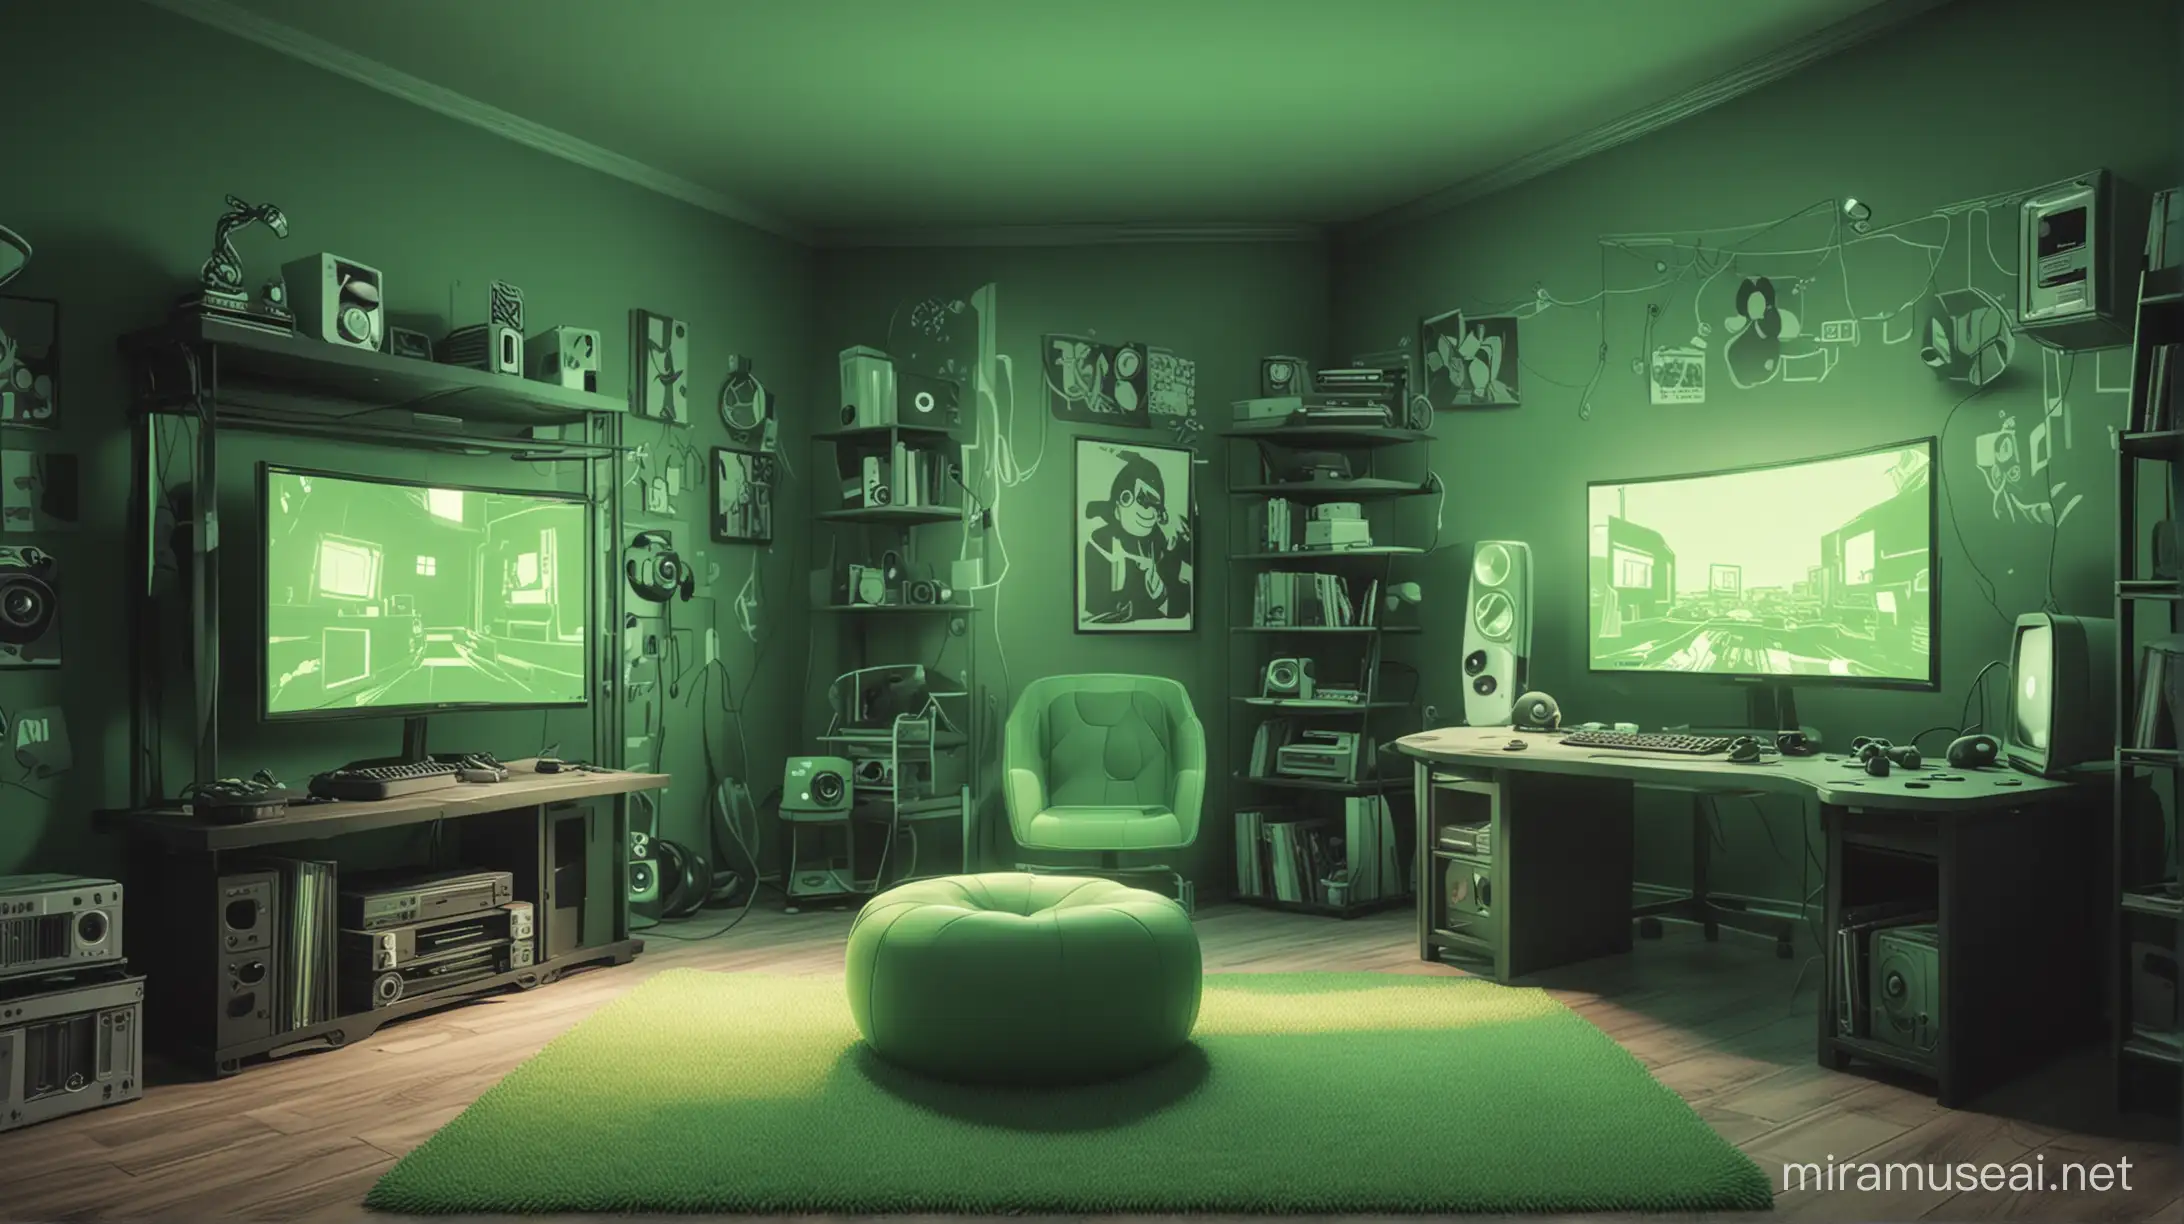 A gamer room. Style  Cartoon. Image green tone. 